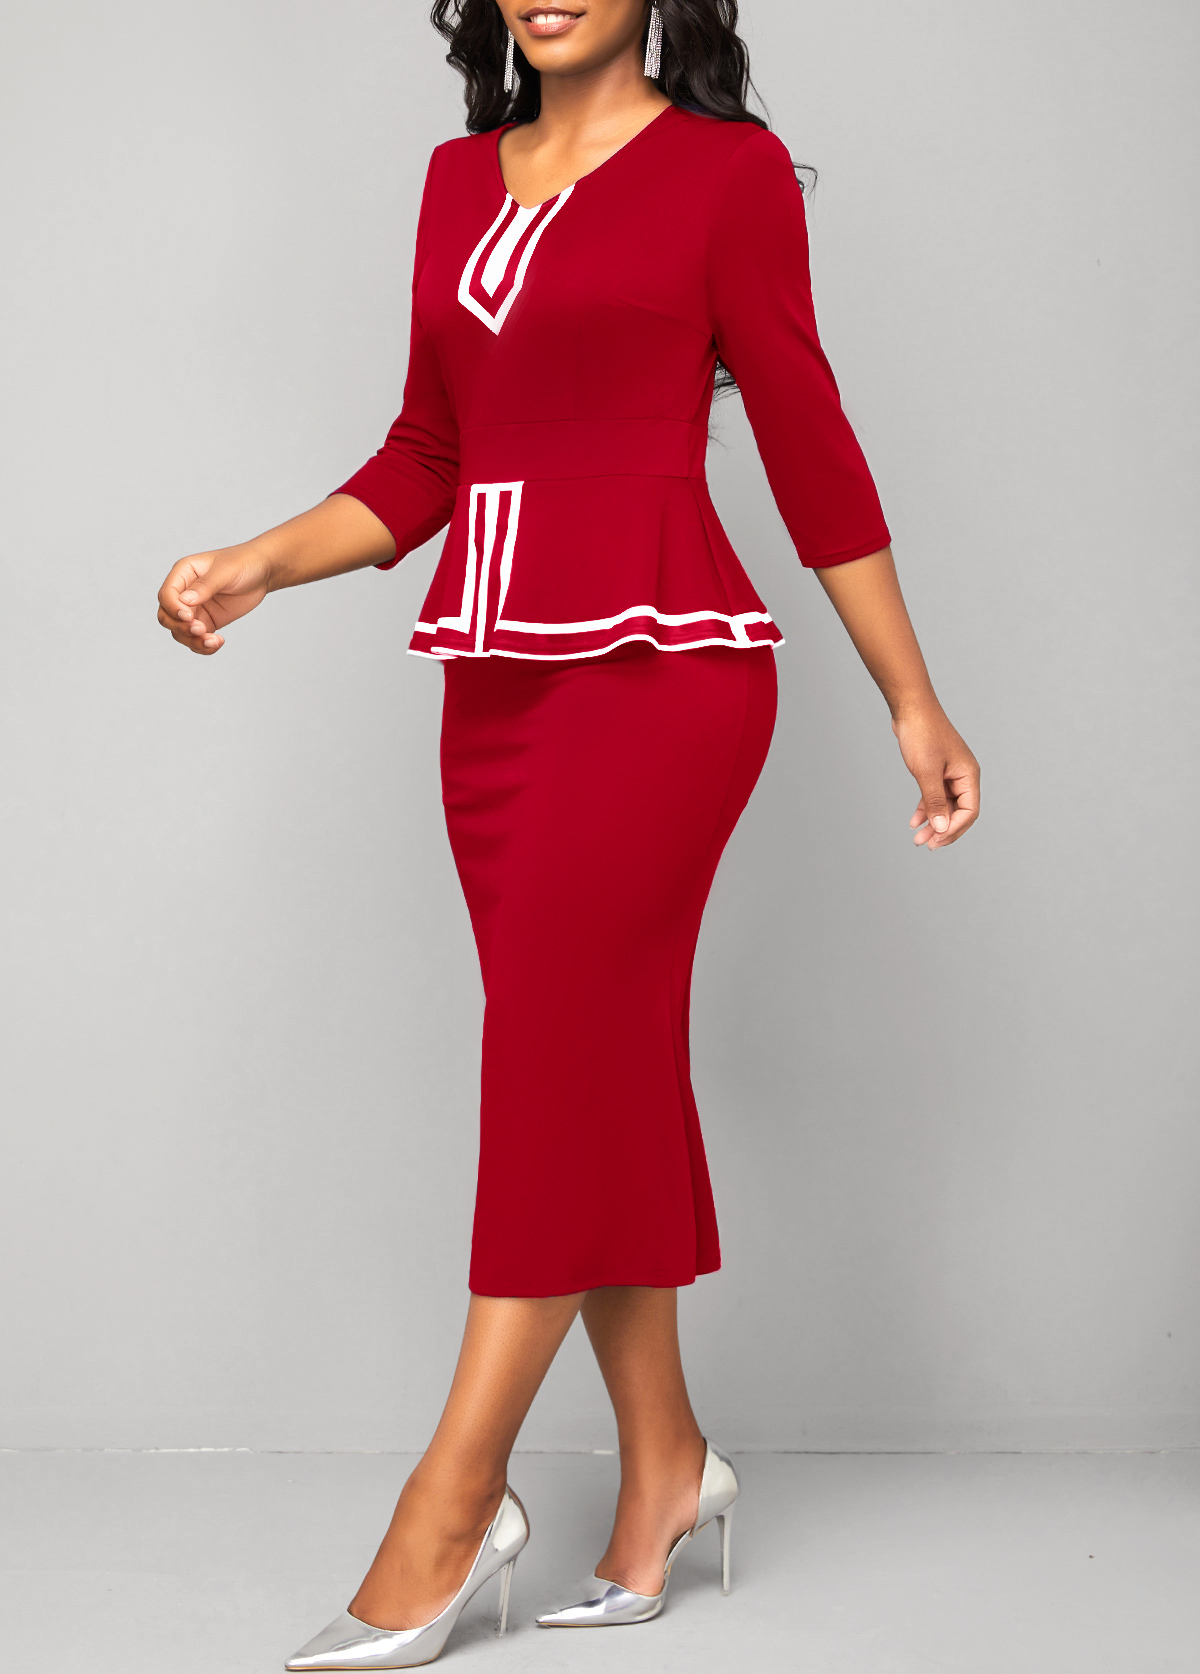 V Neck Red Striped Bodycon Dress